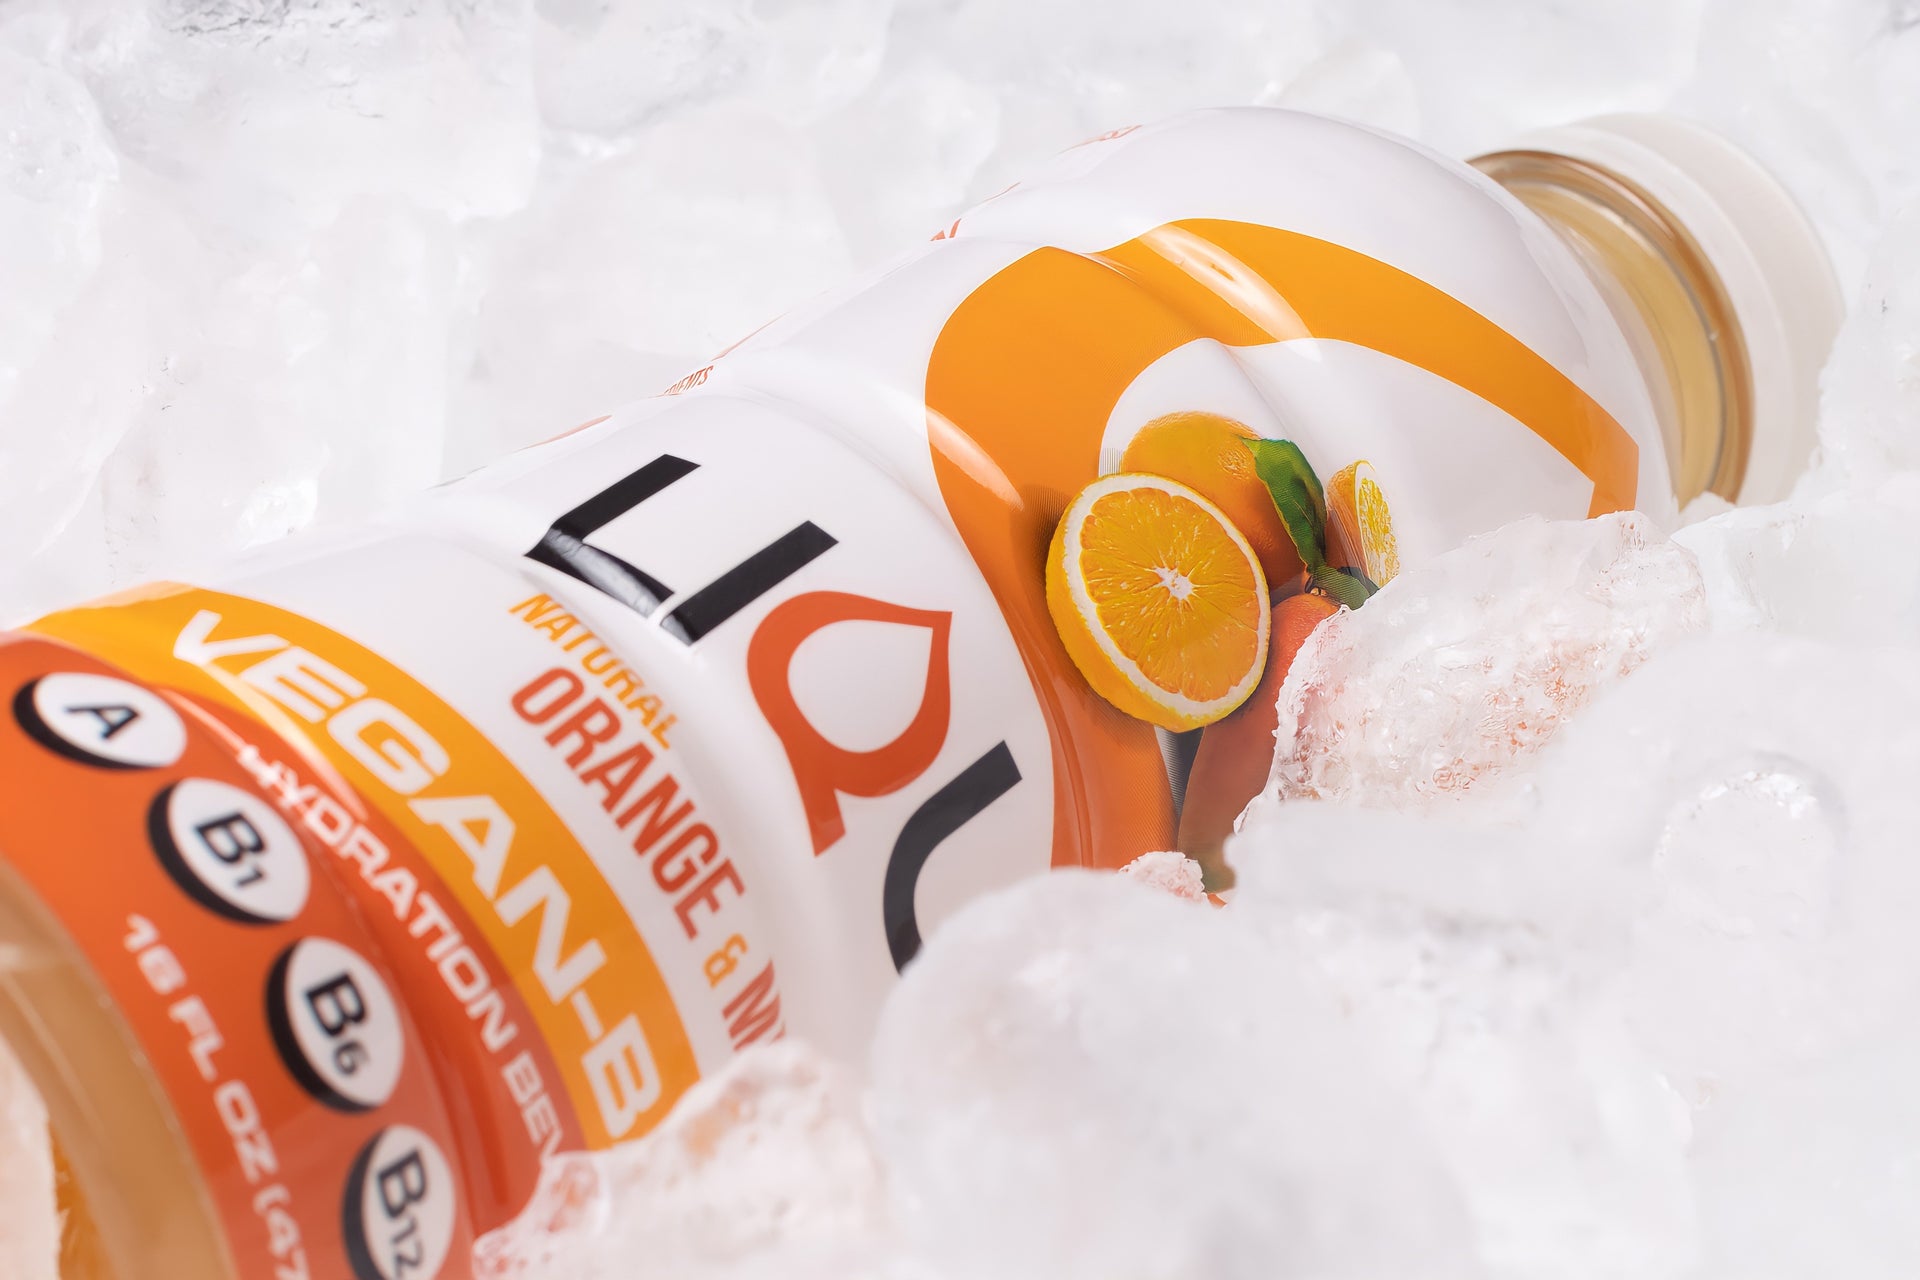 Liquid Hydration Orange Mango... (12 pack) - Liquid Hydration Store